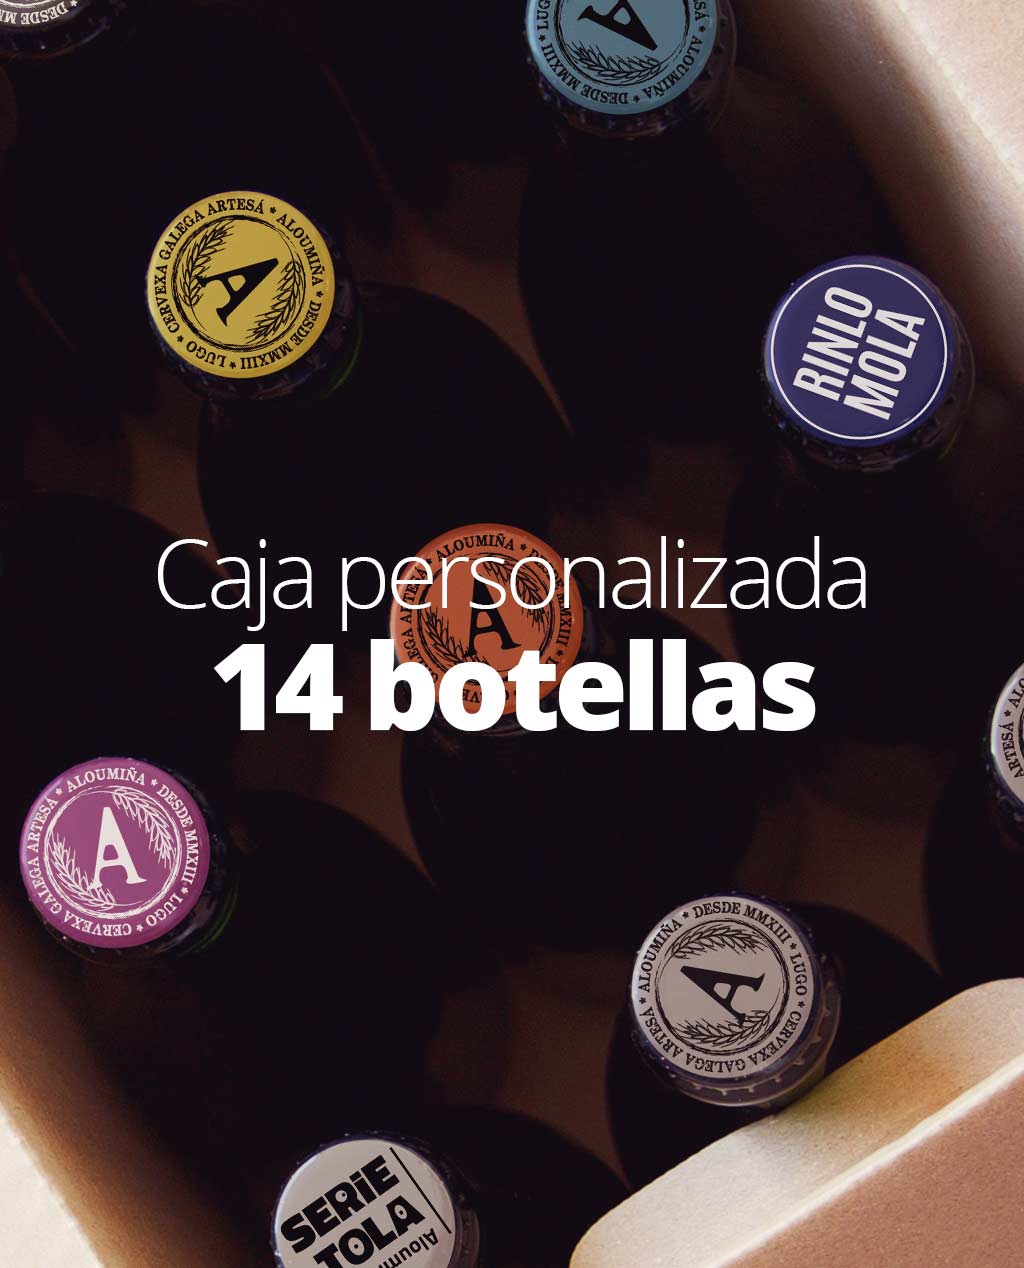 aloumina-cerveza-artesana-craft-beer-lugo-galicia-serietola-caja-personalizada-14-botellas-1024